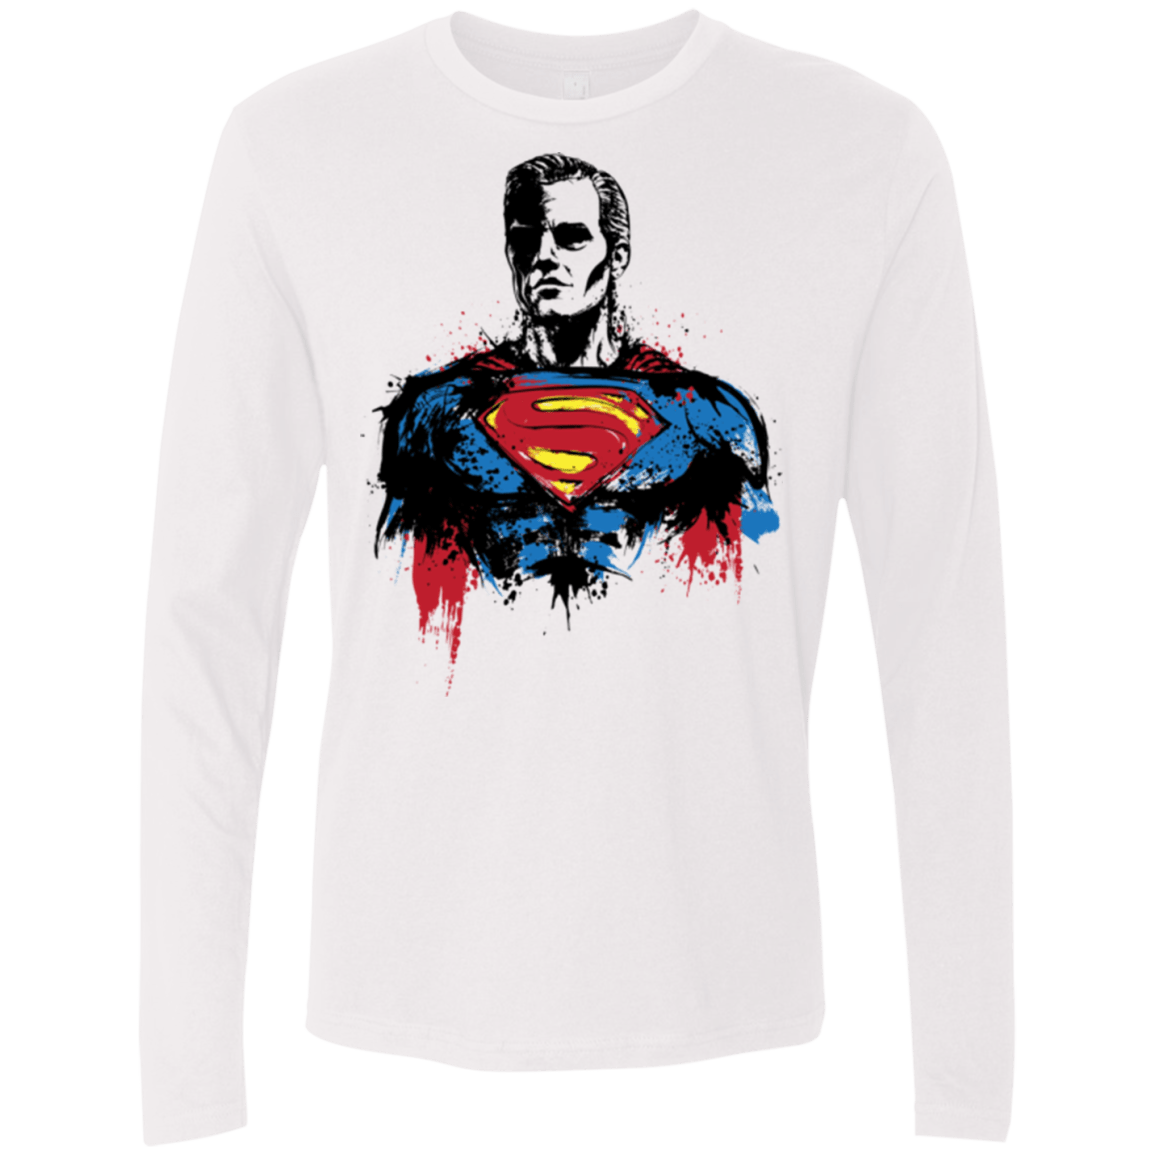 Return of Kryptonian Men's Premium Long Sleeve